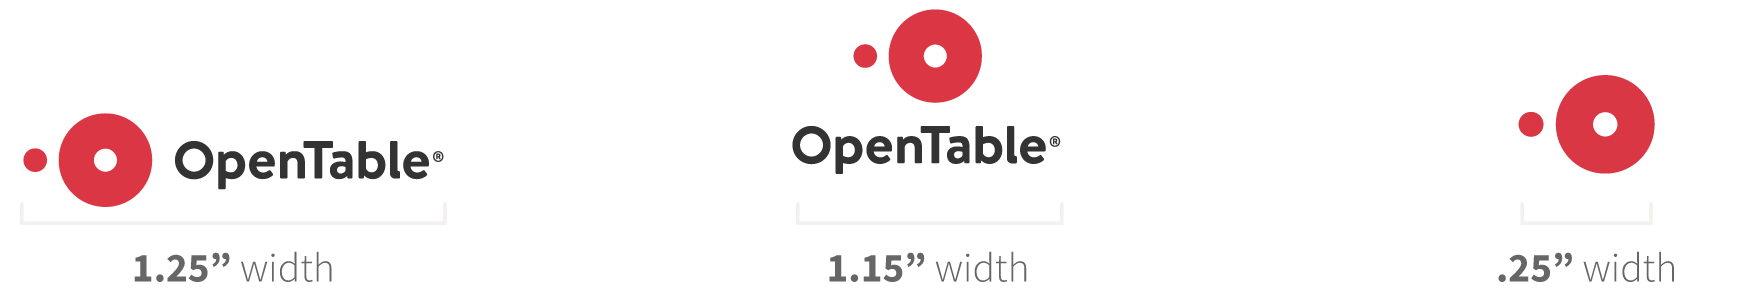 OpenTable Logo - Logo – OpenTable Brand